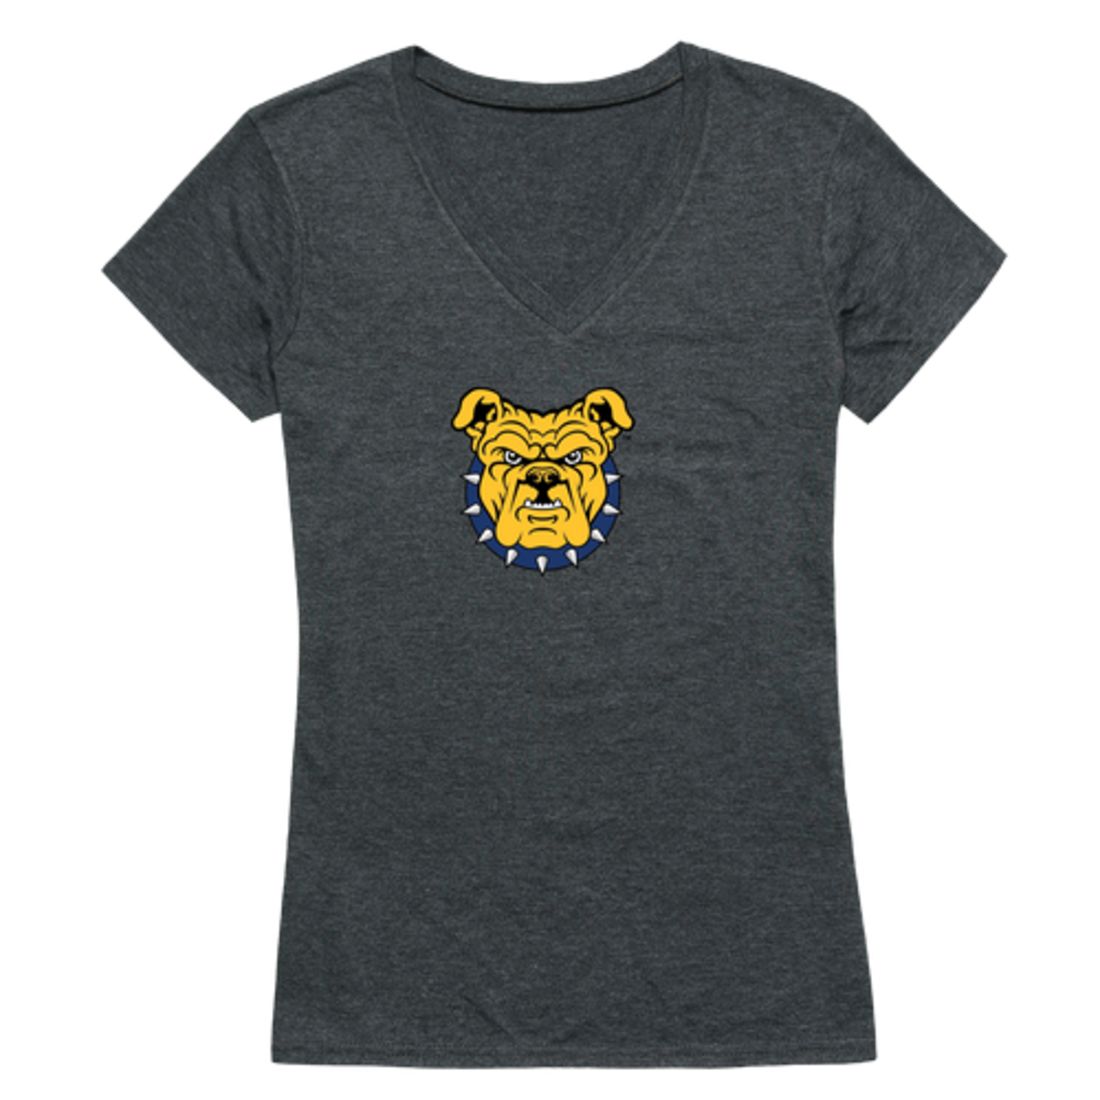 North Carolina A&T State University Aggies Womens Cinder T-Shirt Tee